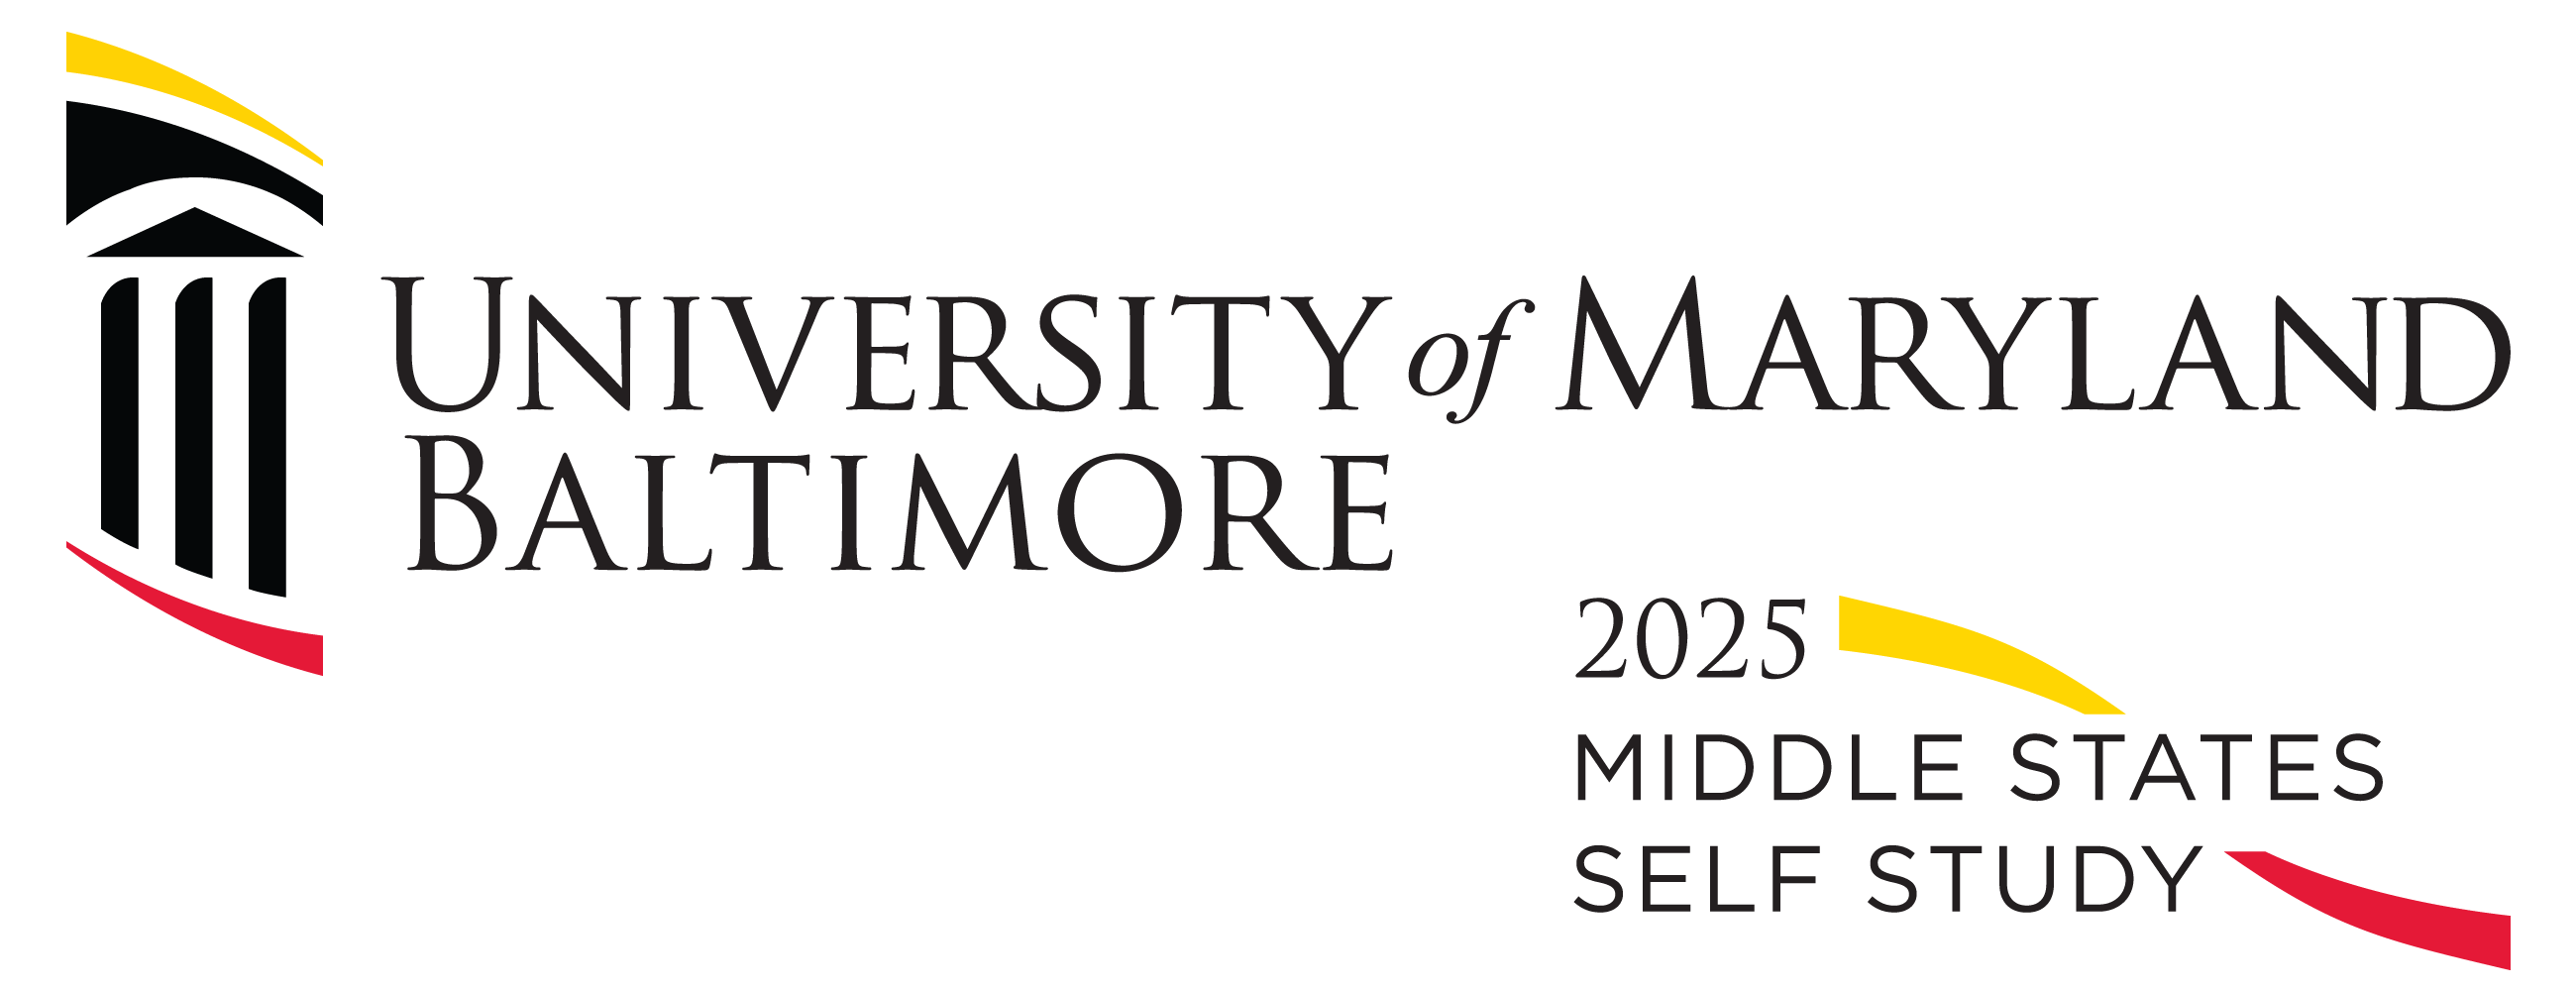 University of Maryland, Baltimore 2025 Middle States